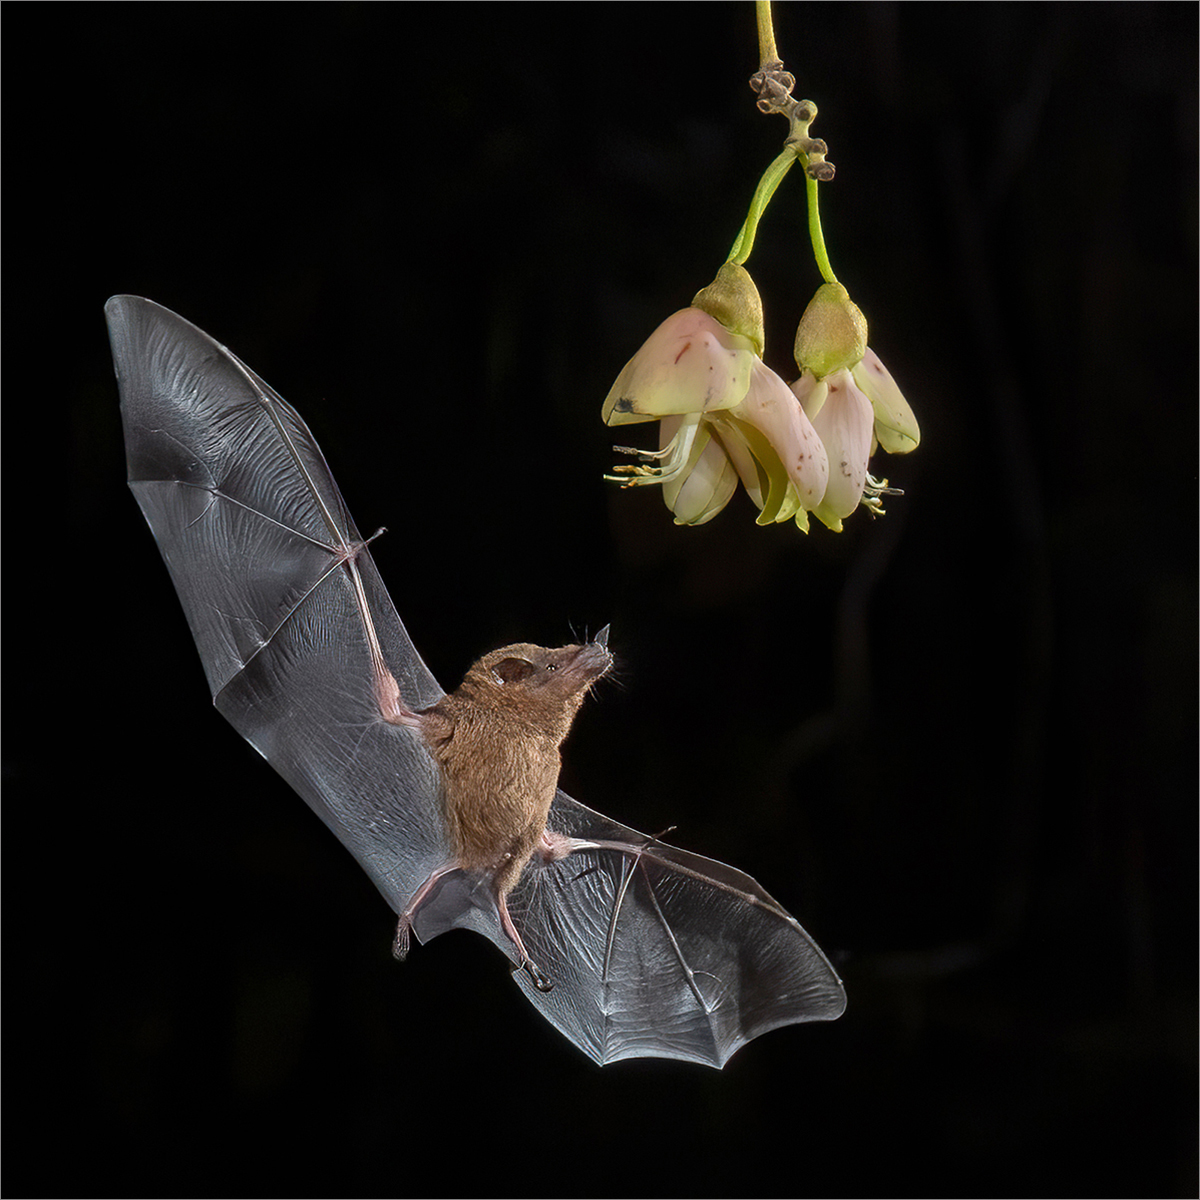 Pallas Long-Tongued Bat - Ann Healey ARPS DPAGB EFIAP BPE3* - BPE Ribbon